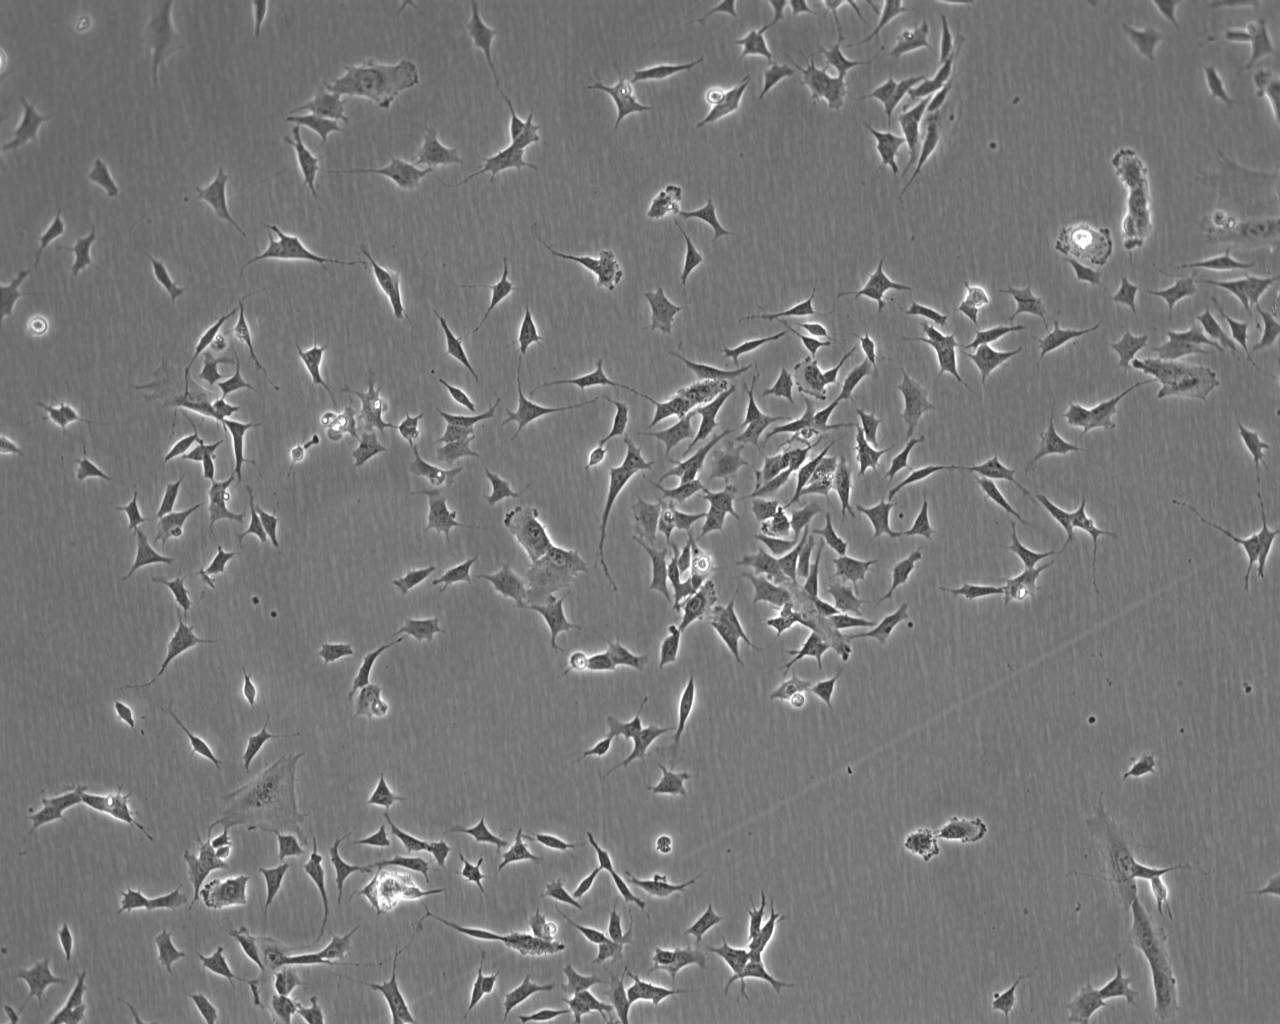 SNU-216 epithelioid cells人胃癌细胞系,SNU-216 epithelioid cells